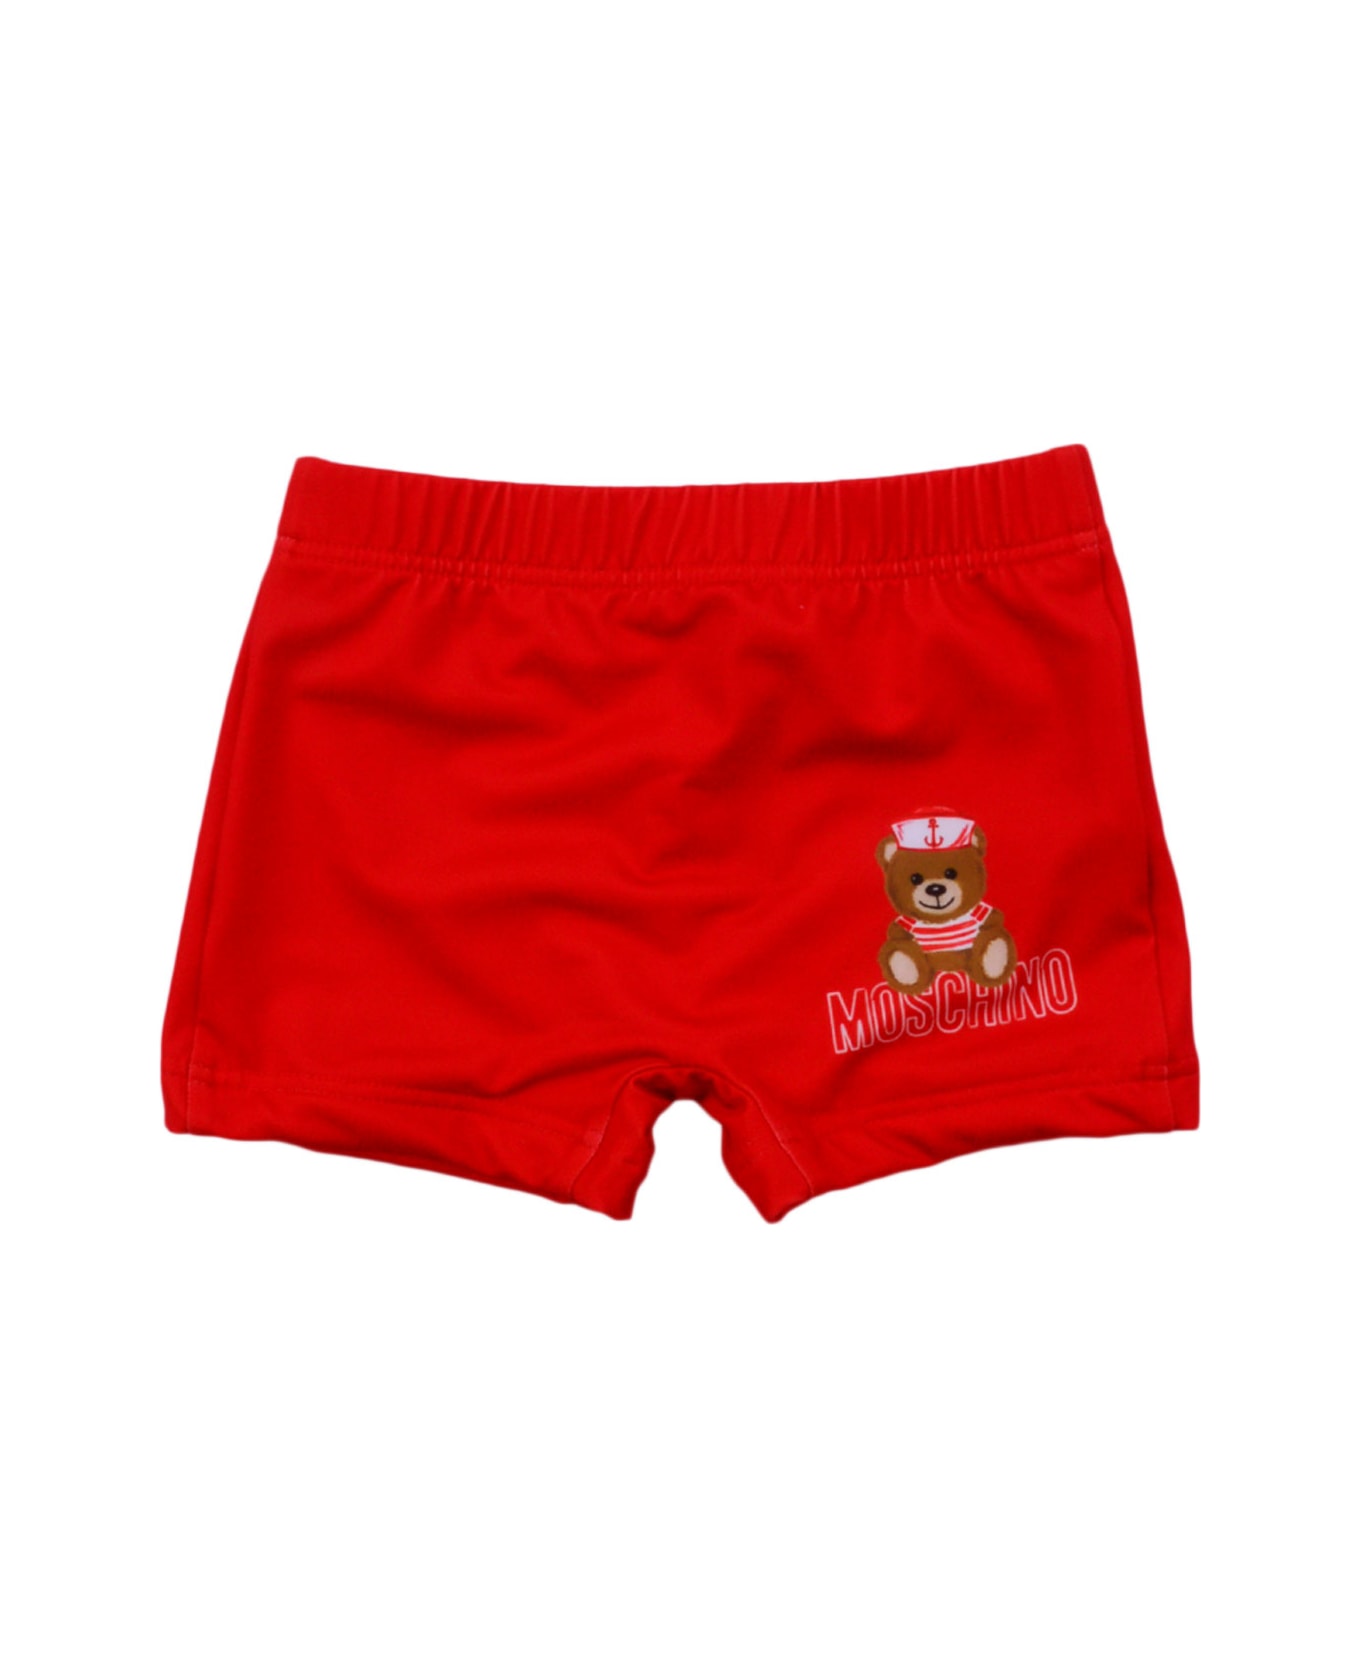 Moschino Printed Beach Shorts - Red